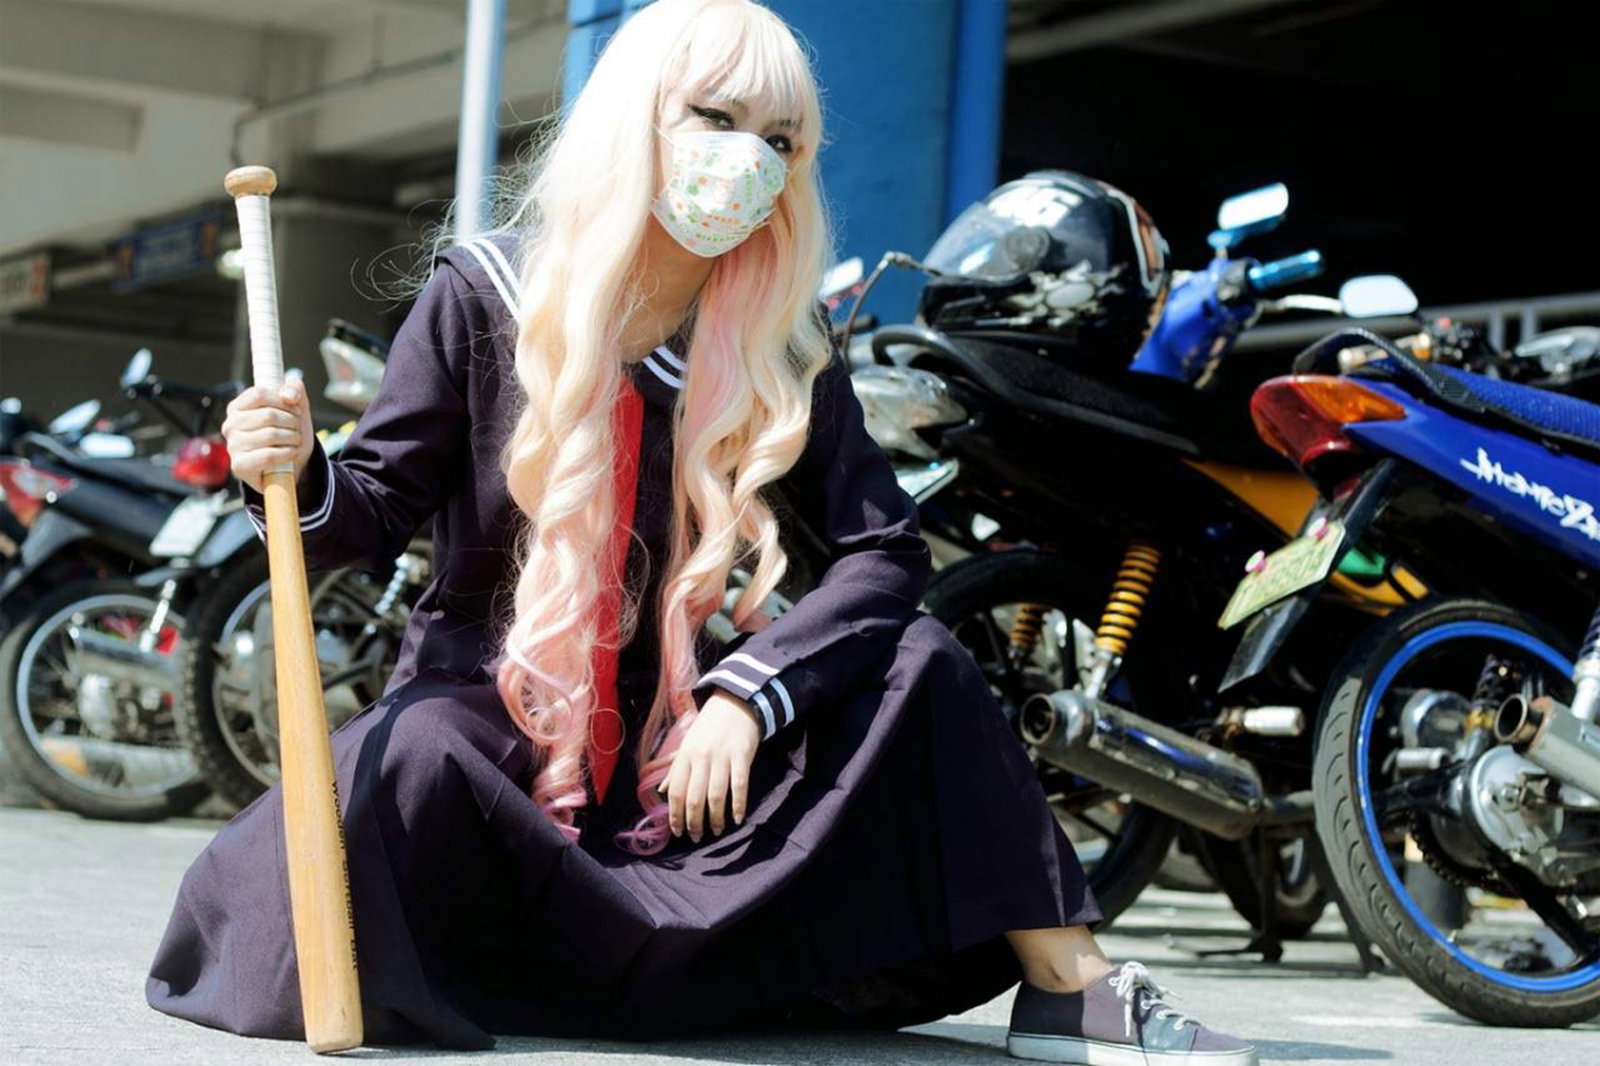 Bosozoku Badass Girl Gangs. An Outlaw Subculture of Japan